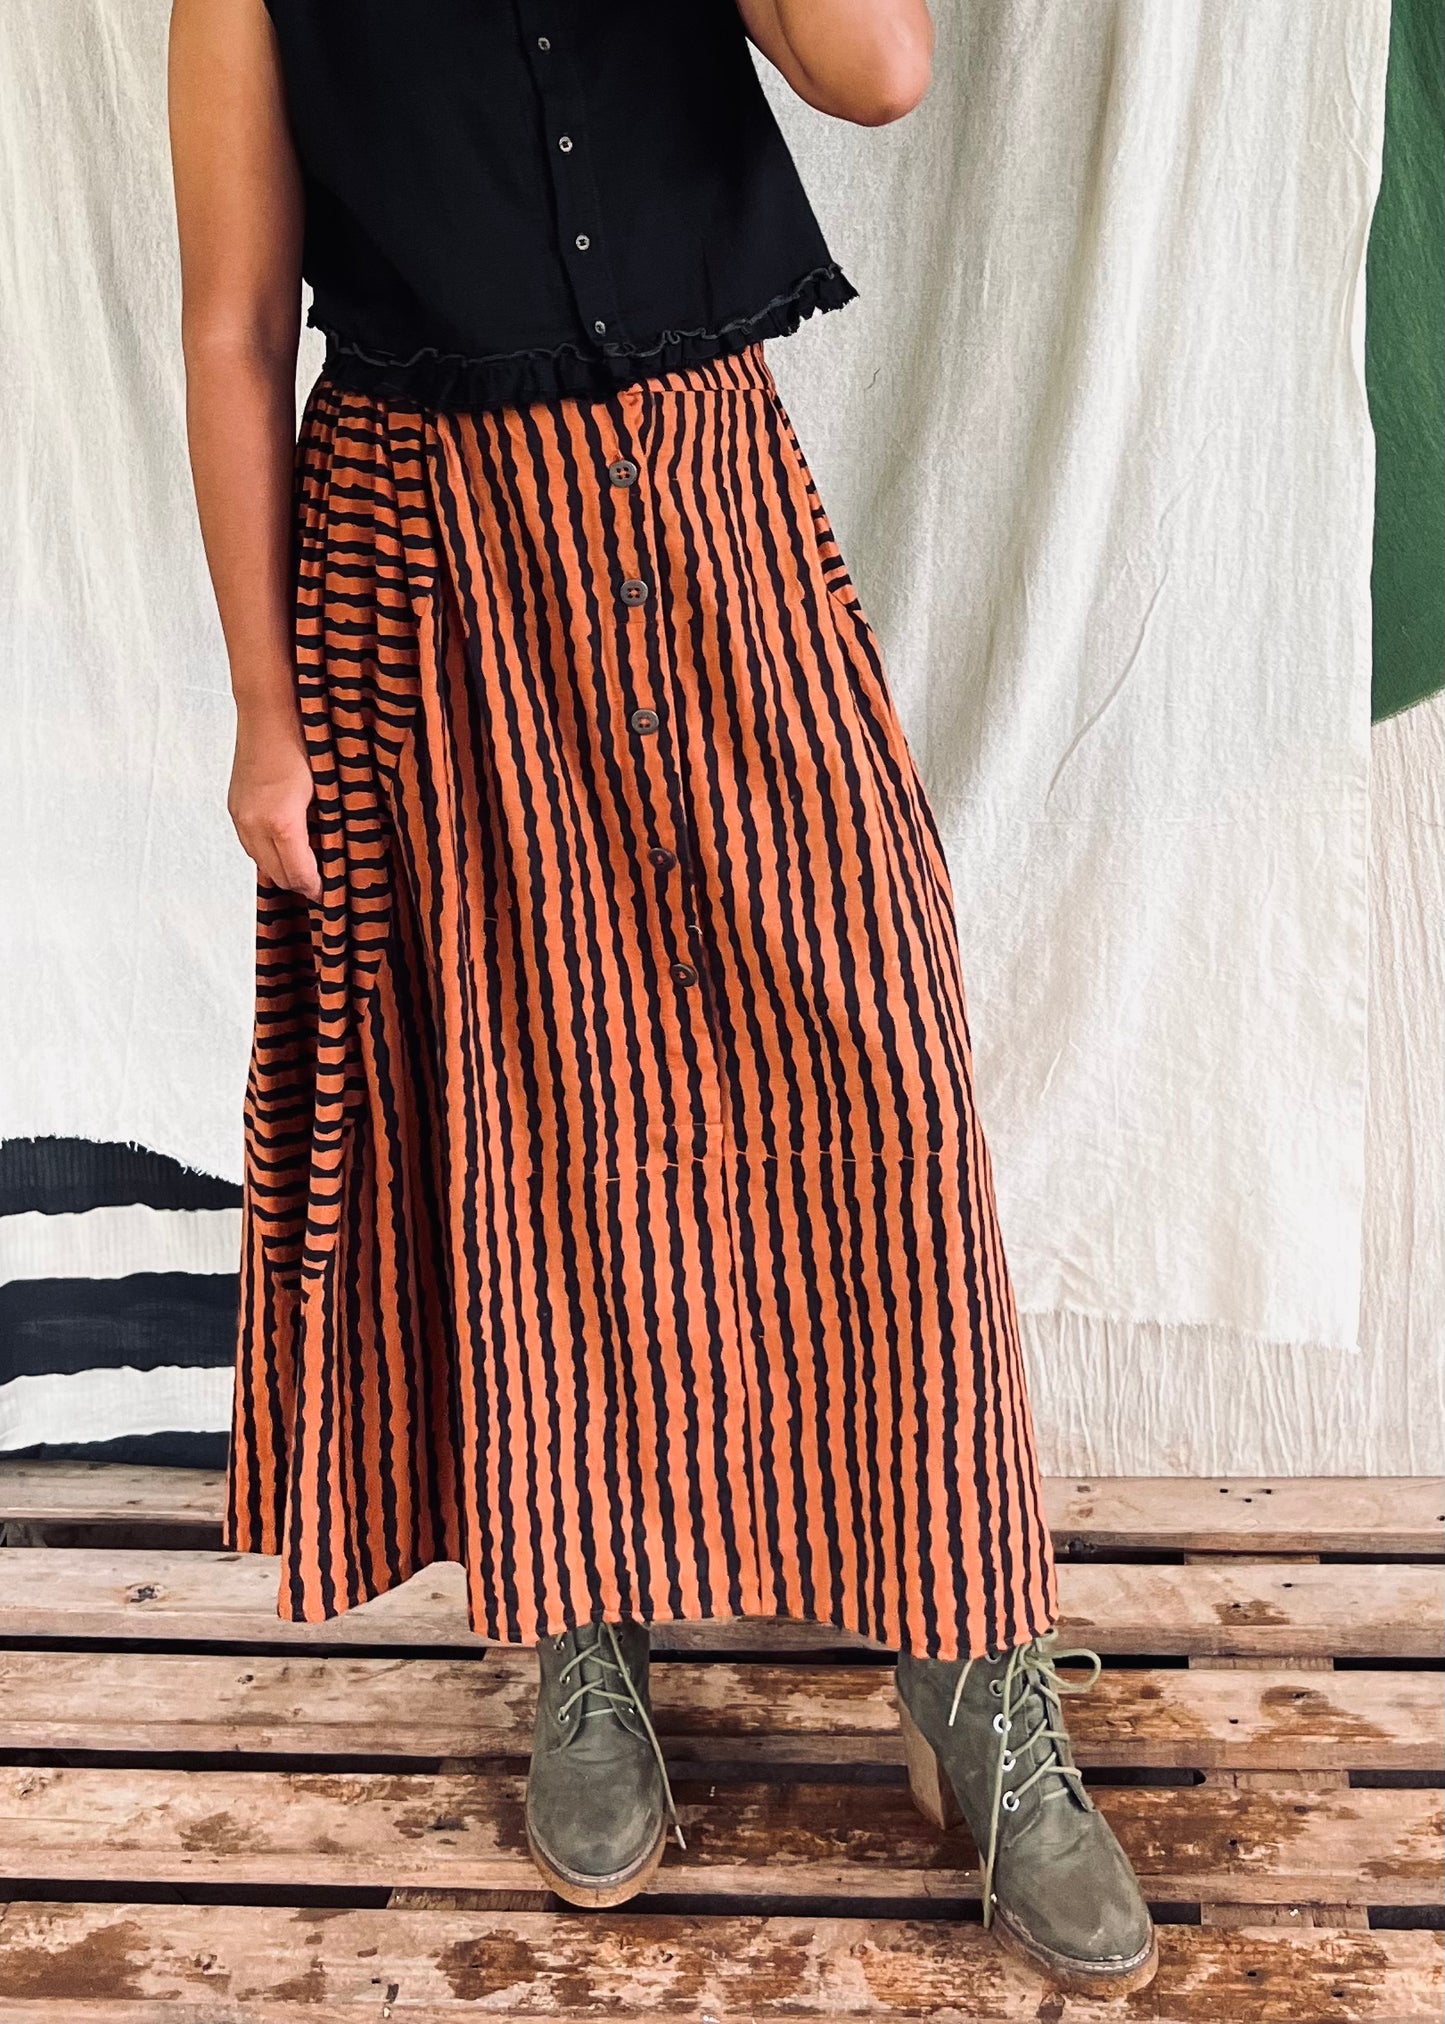 Tan Stripes Skirt